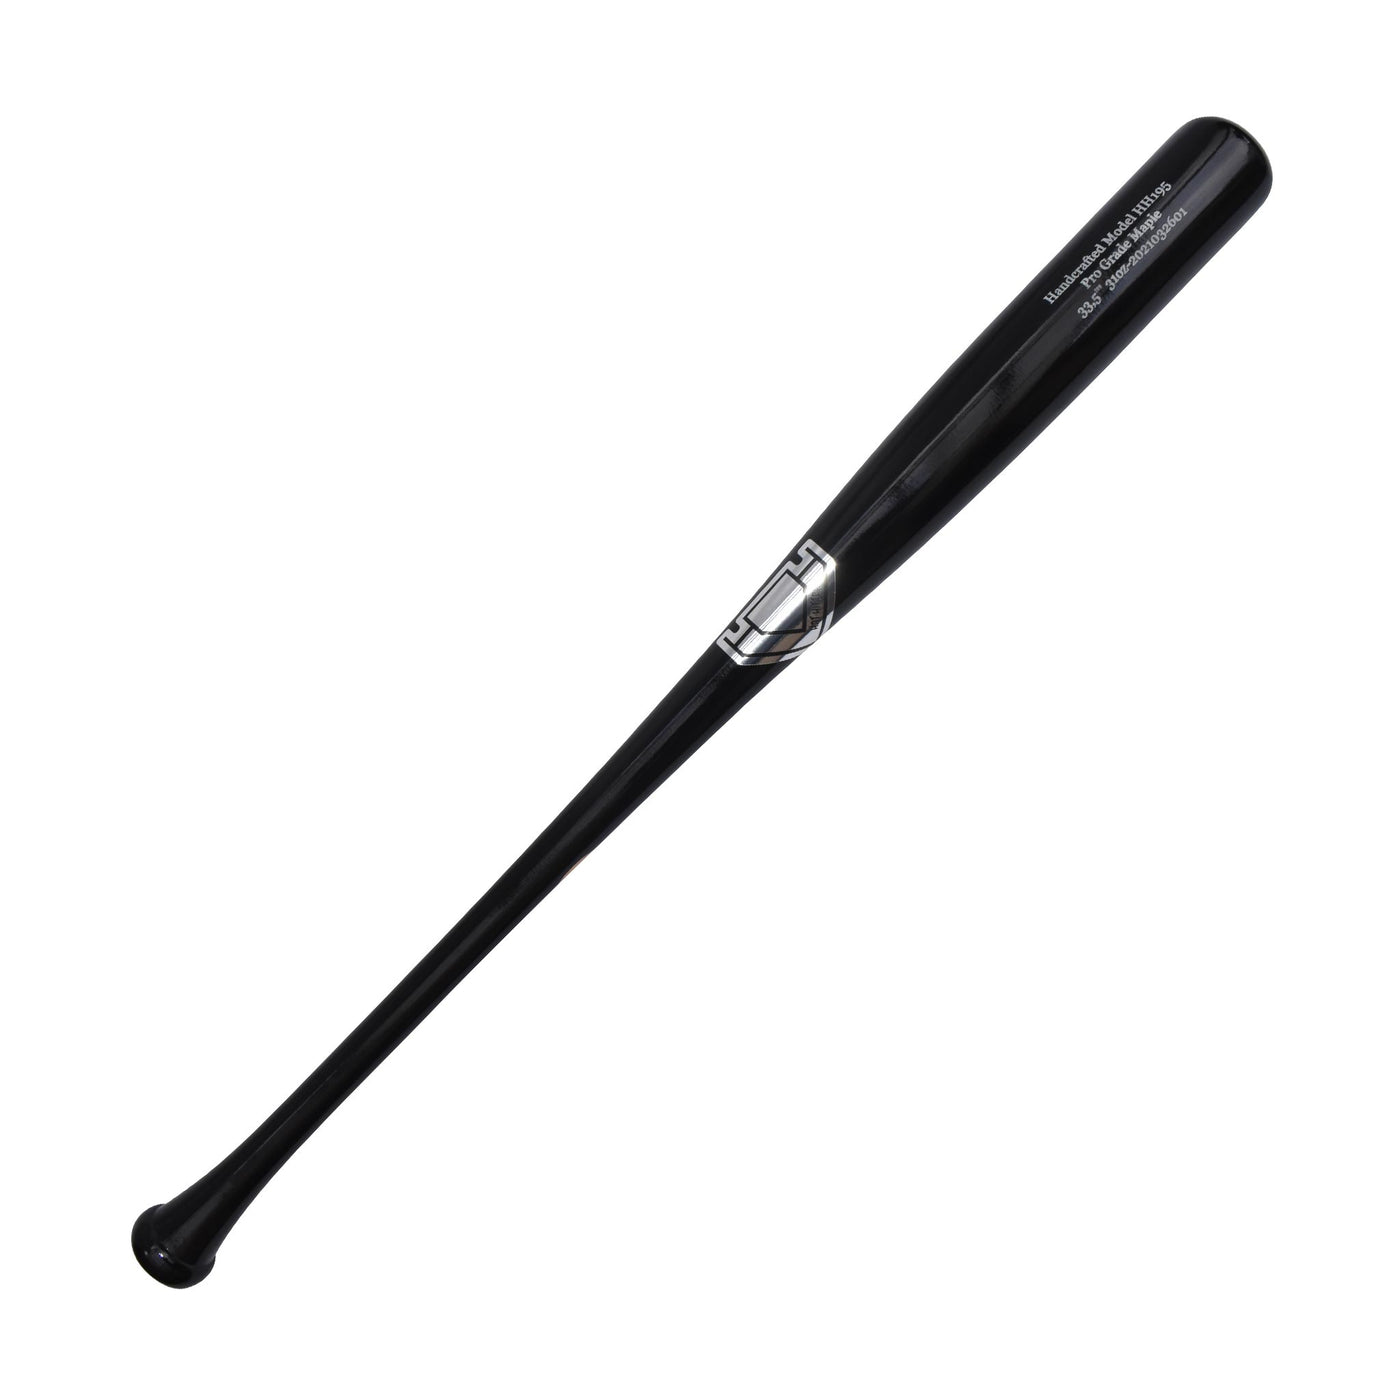 Pro Grade HH195 Maple Baseball Bat - Hot Hitters | Baseball & Softball Shop - baseball softball shop online europe shipping 